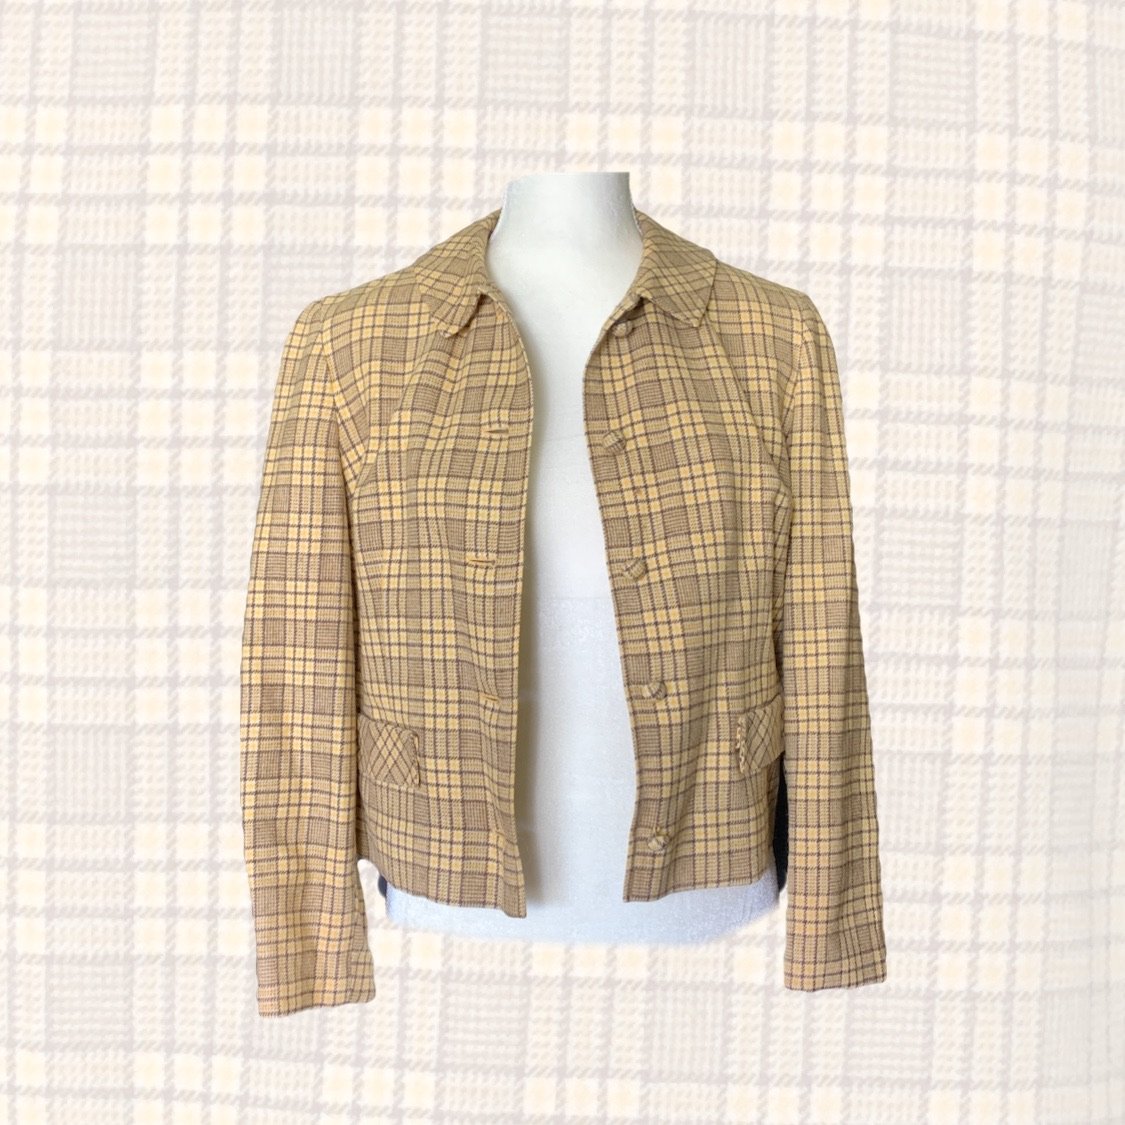 1970s Yellow Plaid Short Wool Jacket or Blazer by Pendleton. 2020 Fall